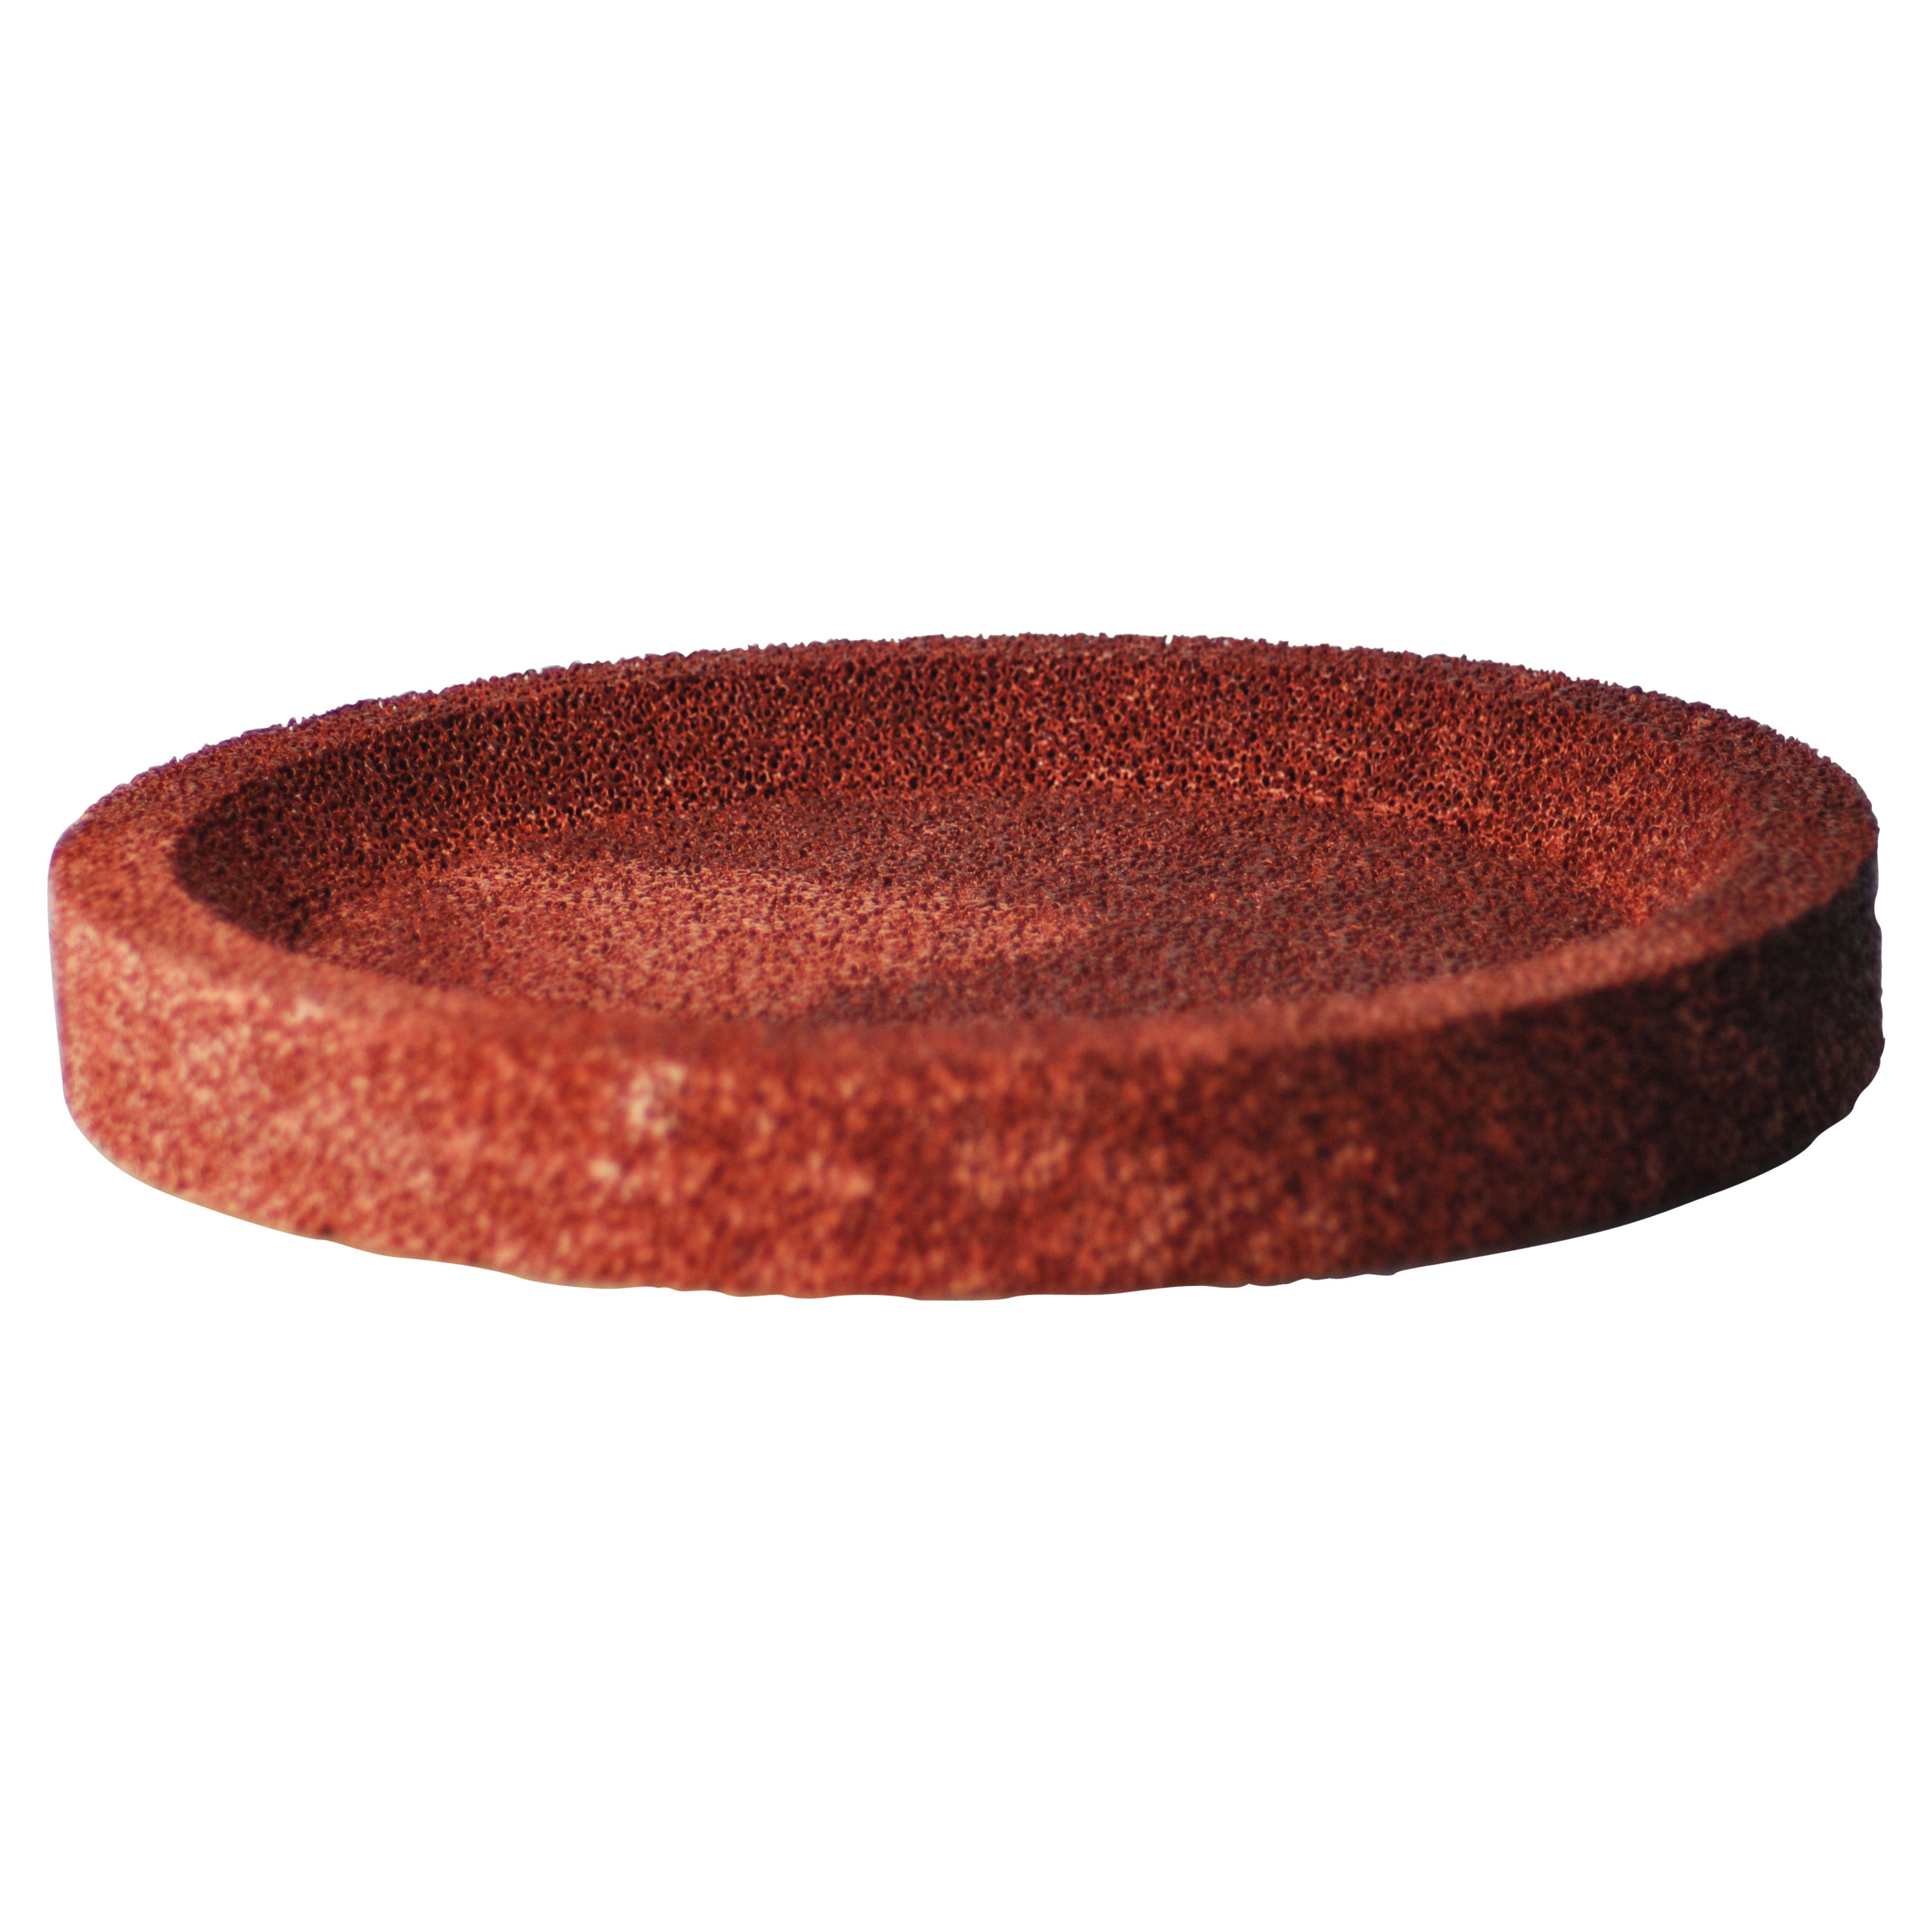 Brick Red Porous Ceramic Centrepiece Bowl